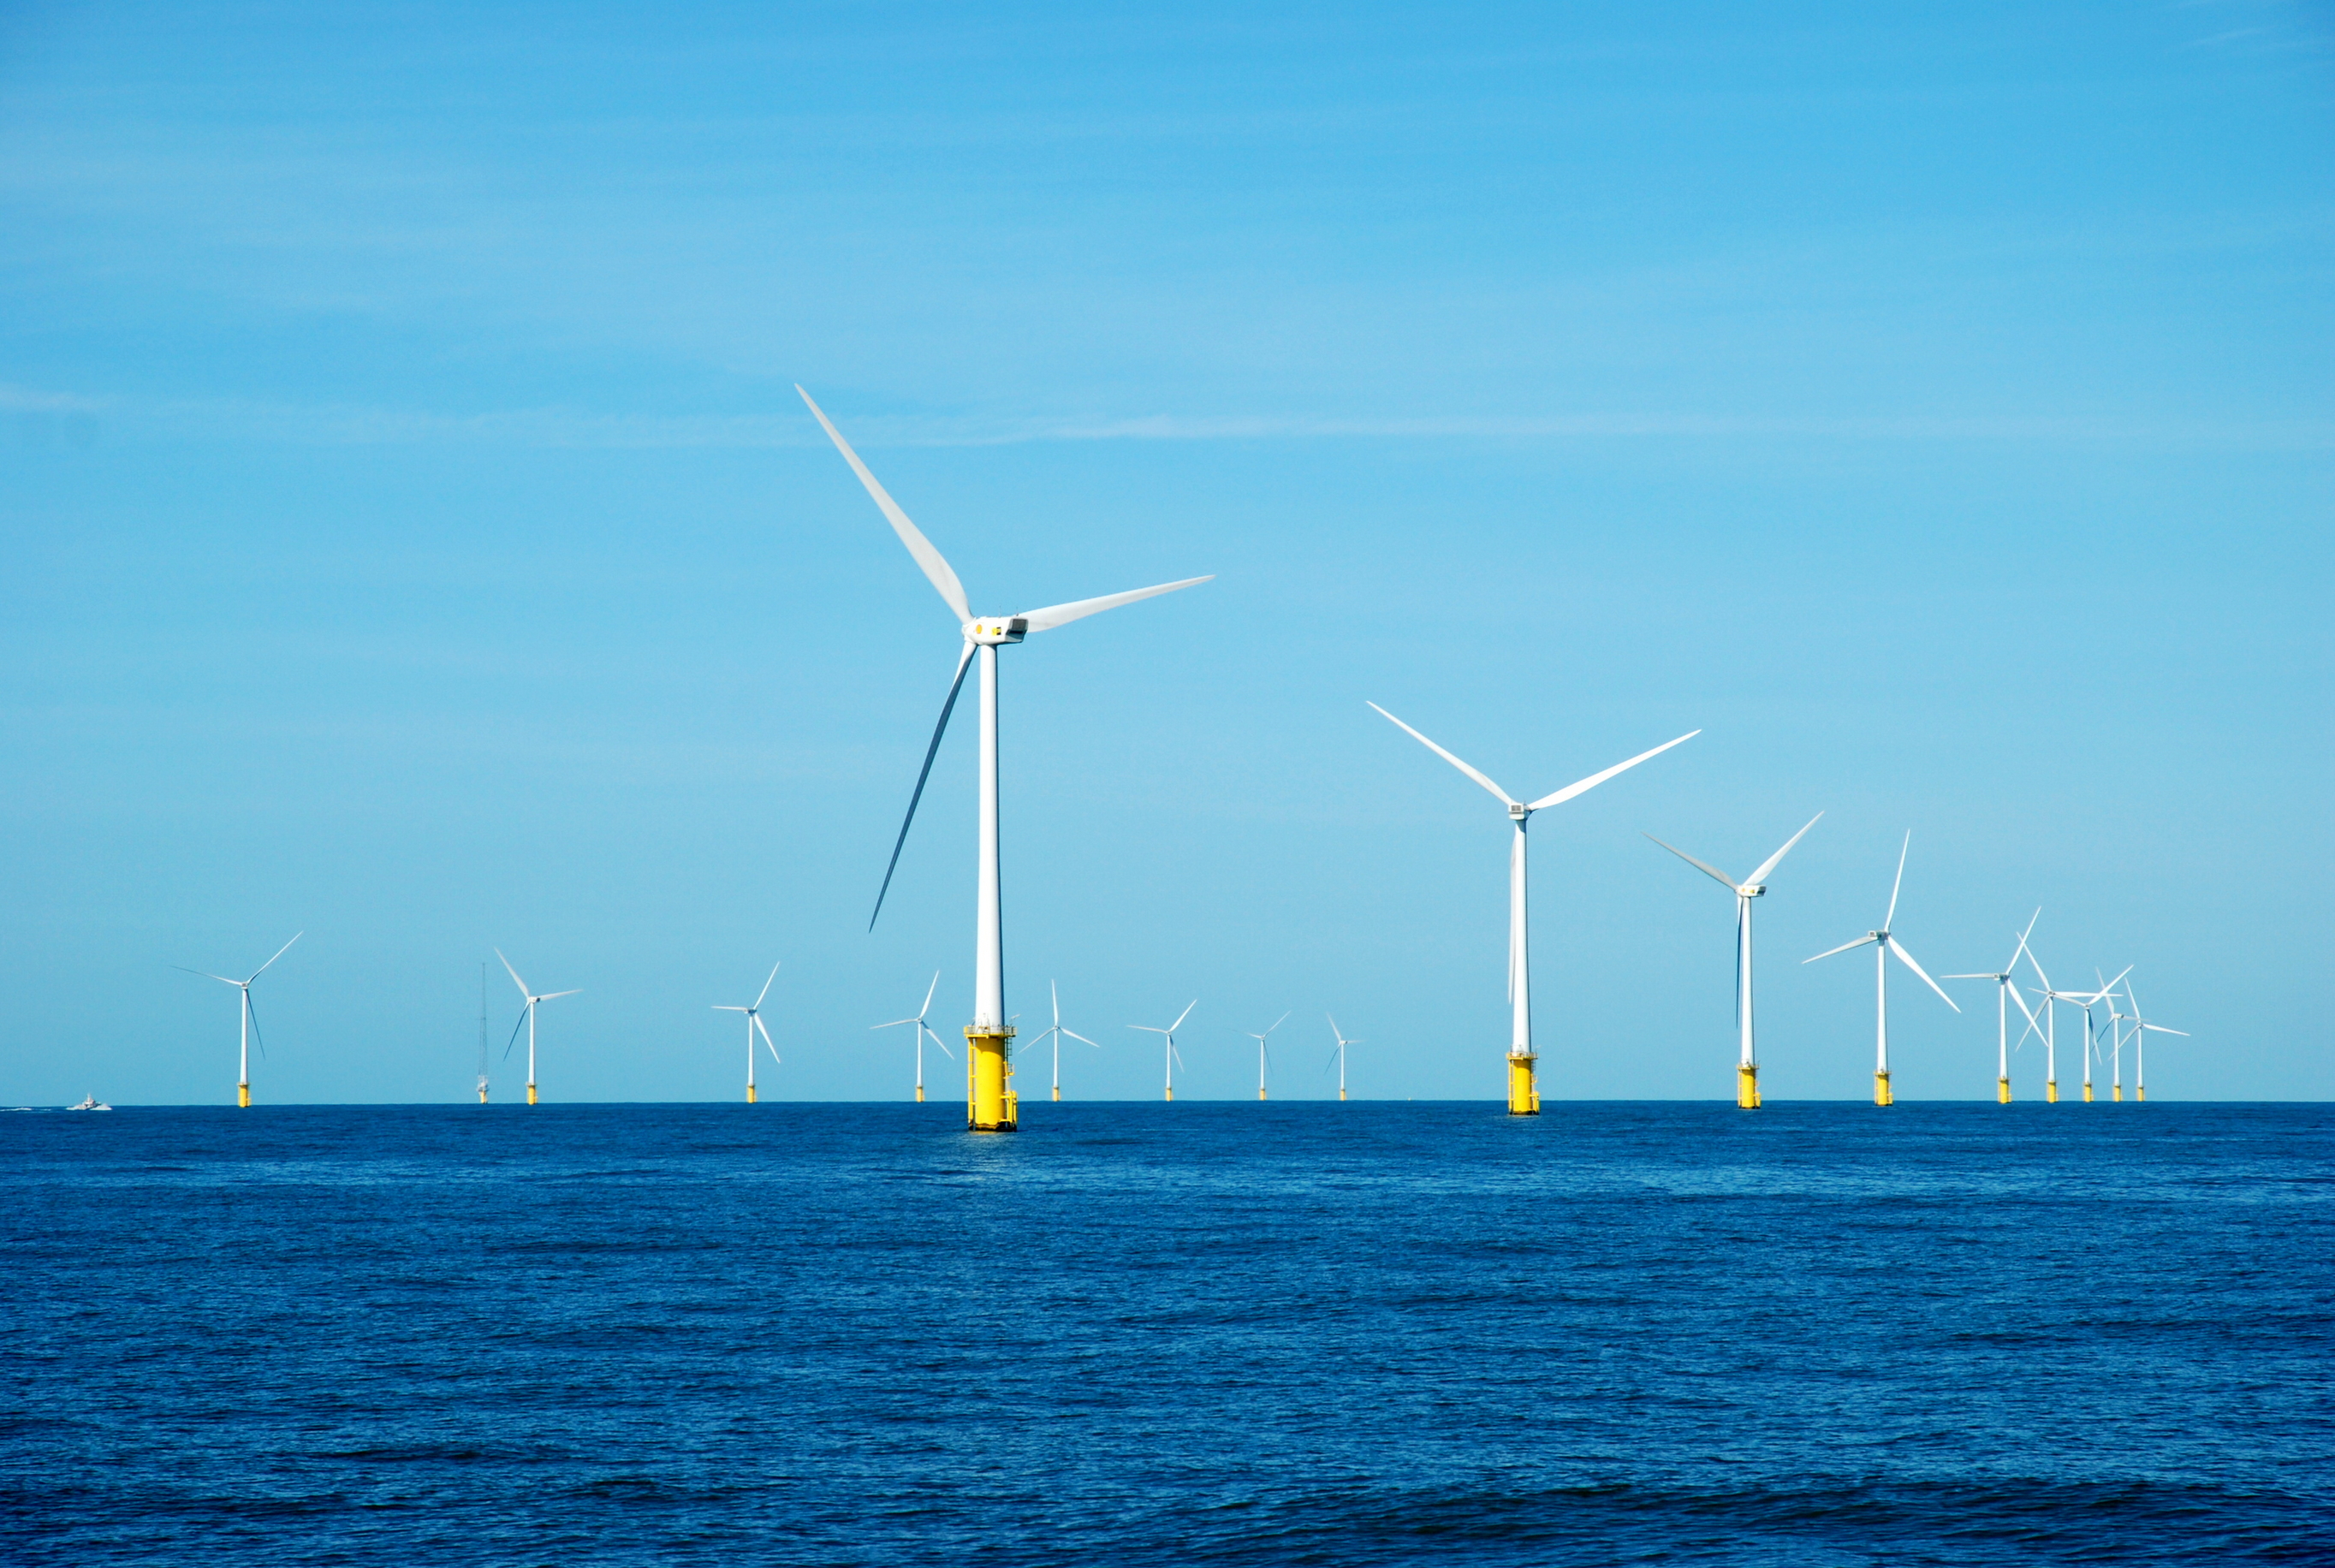 20220729 offshore windpark